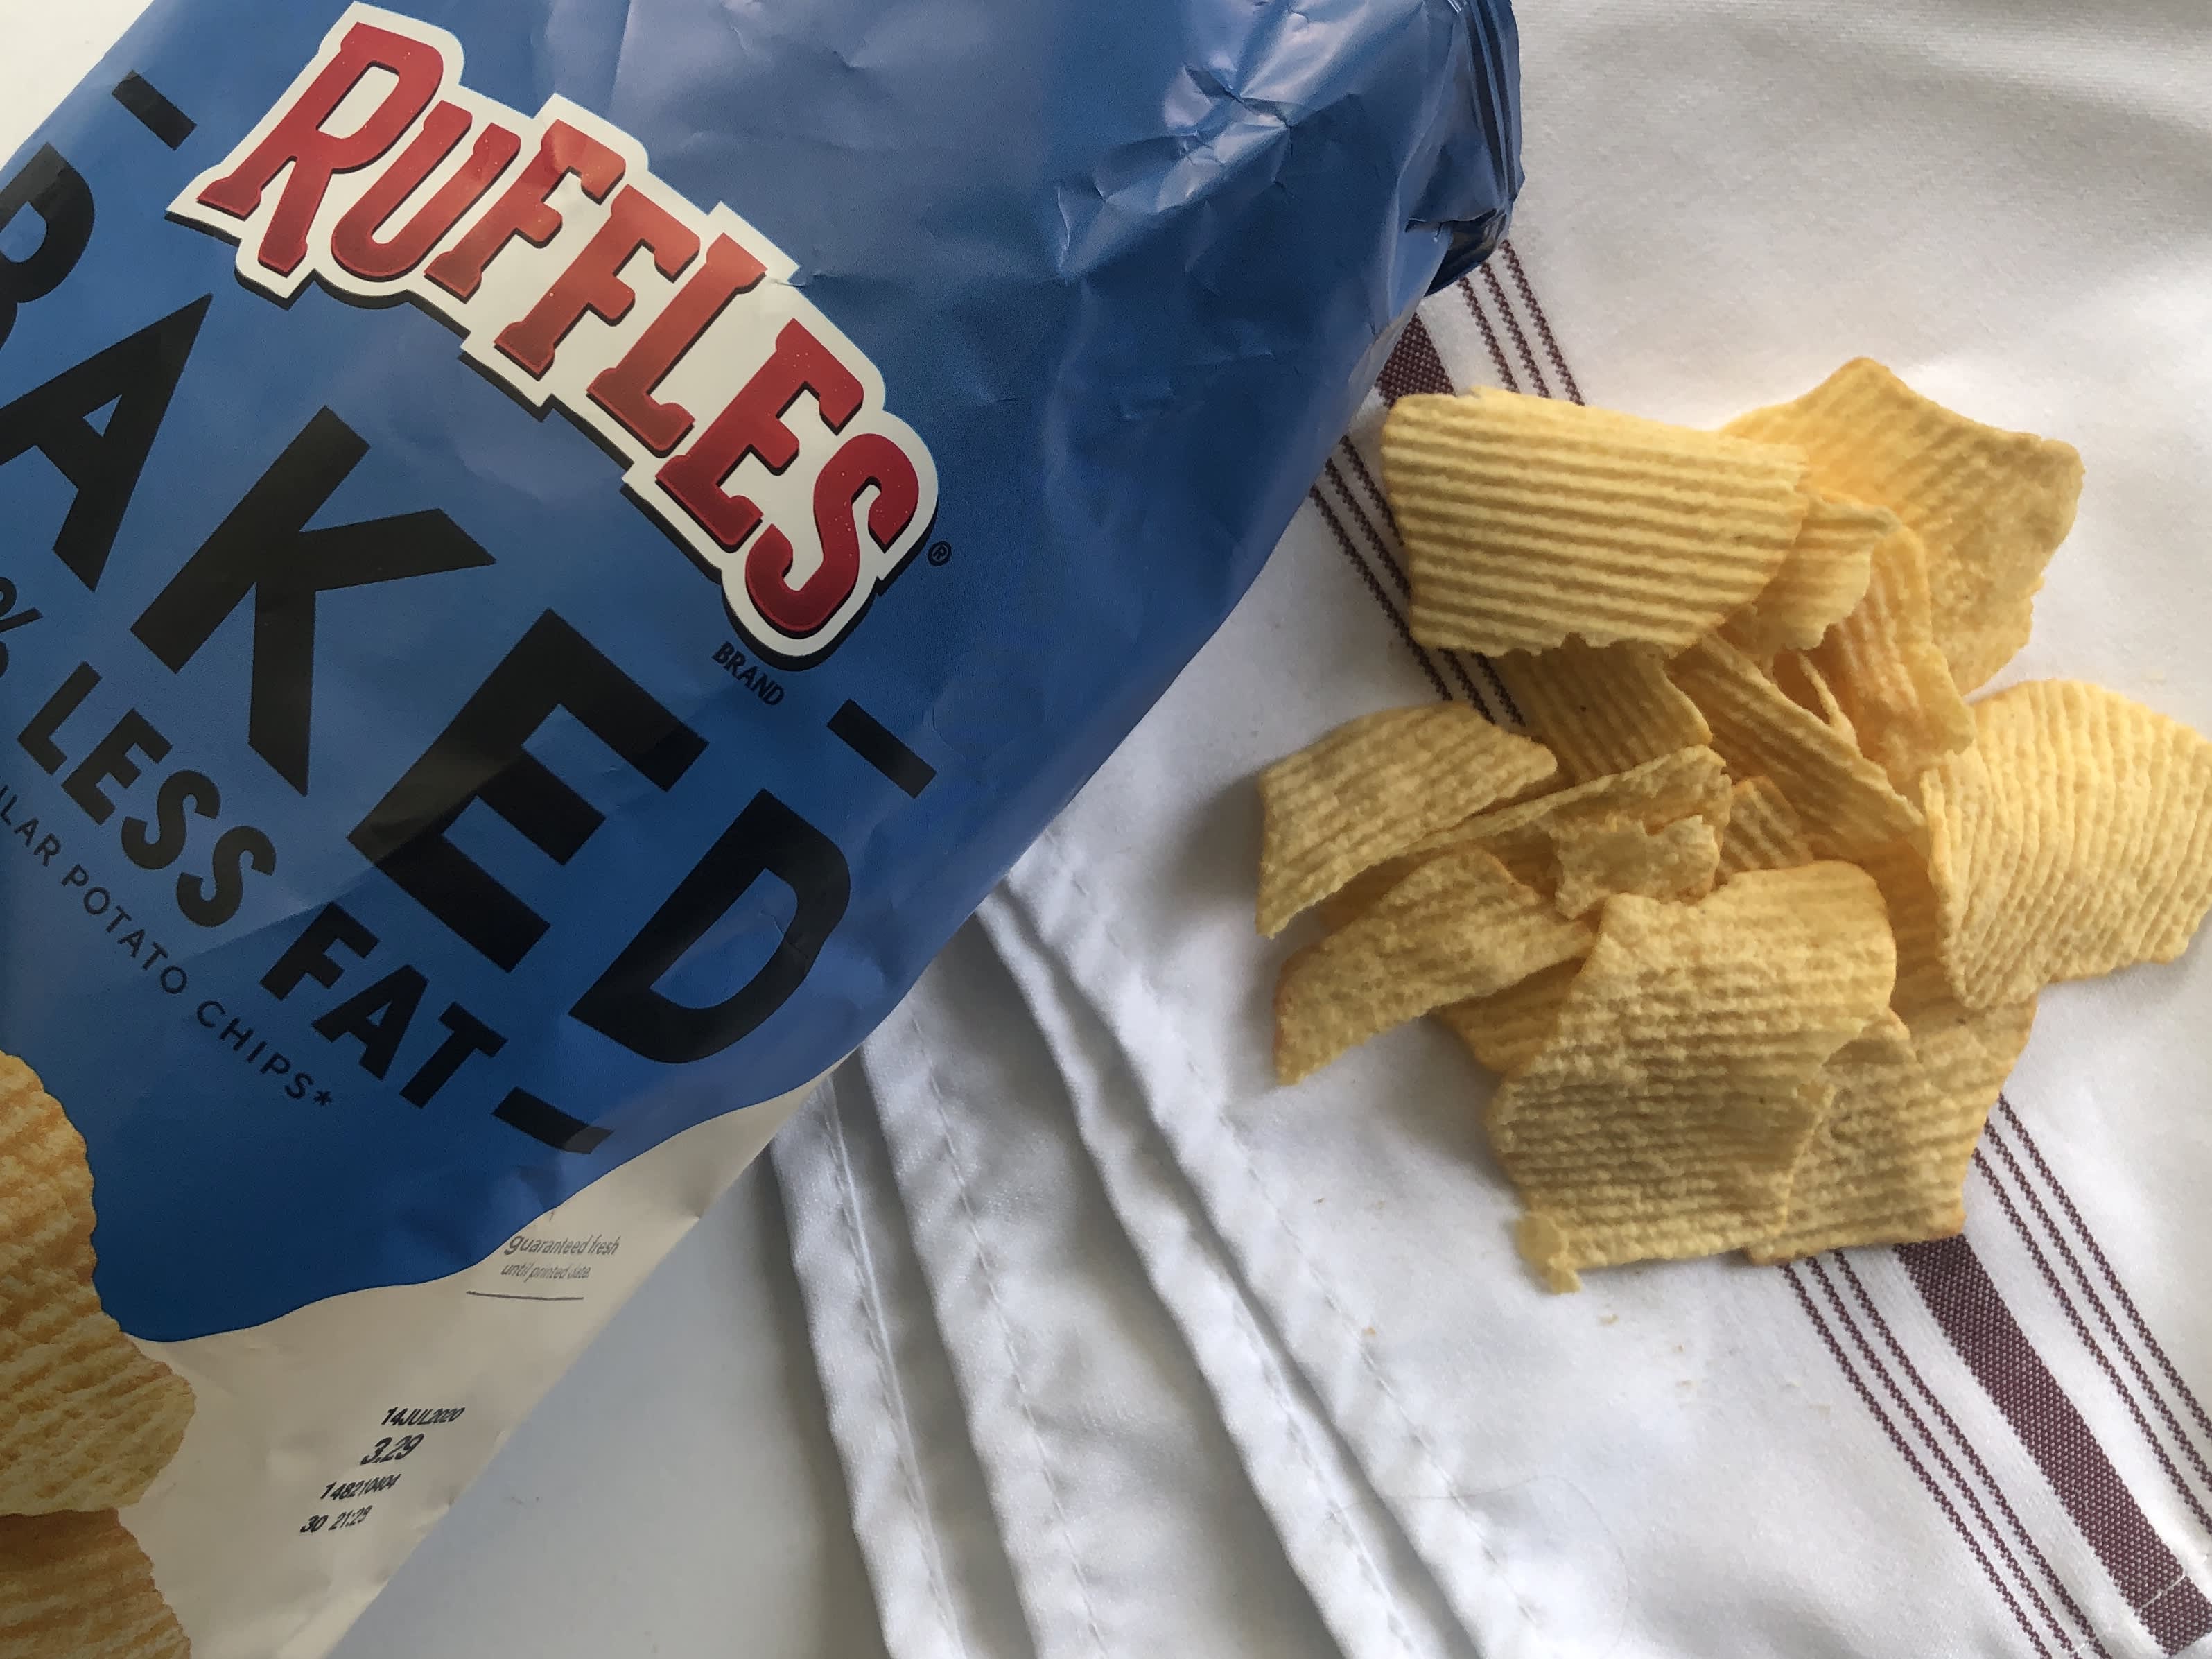 Best Potato Chip Brands of 2022 — Ruffles, Lay's, Kettle Brand